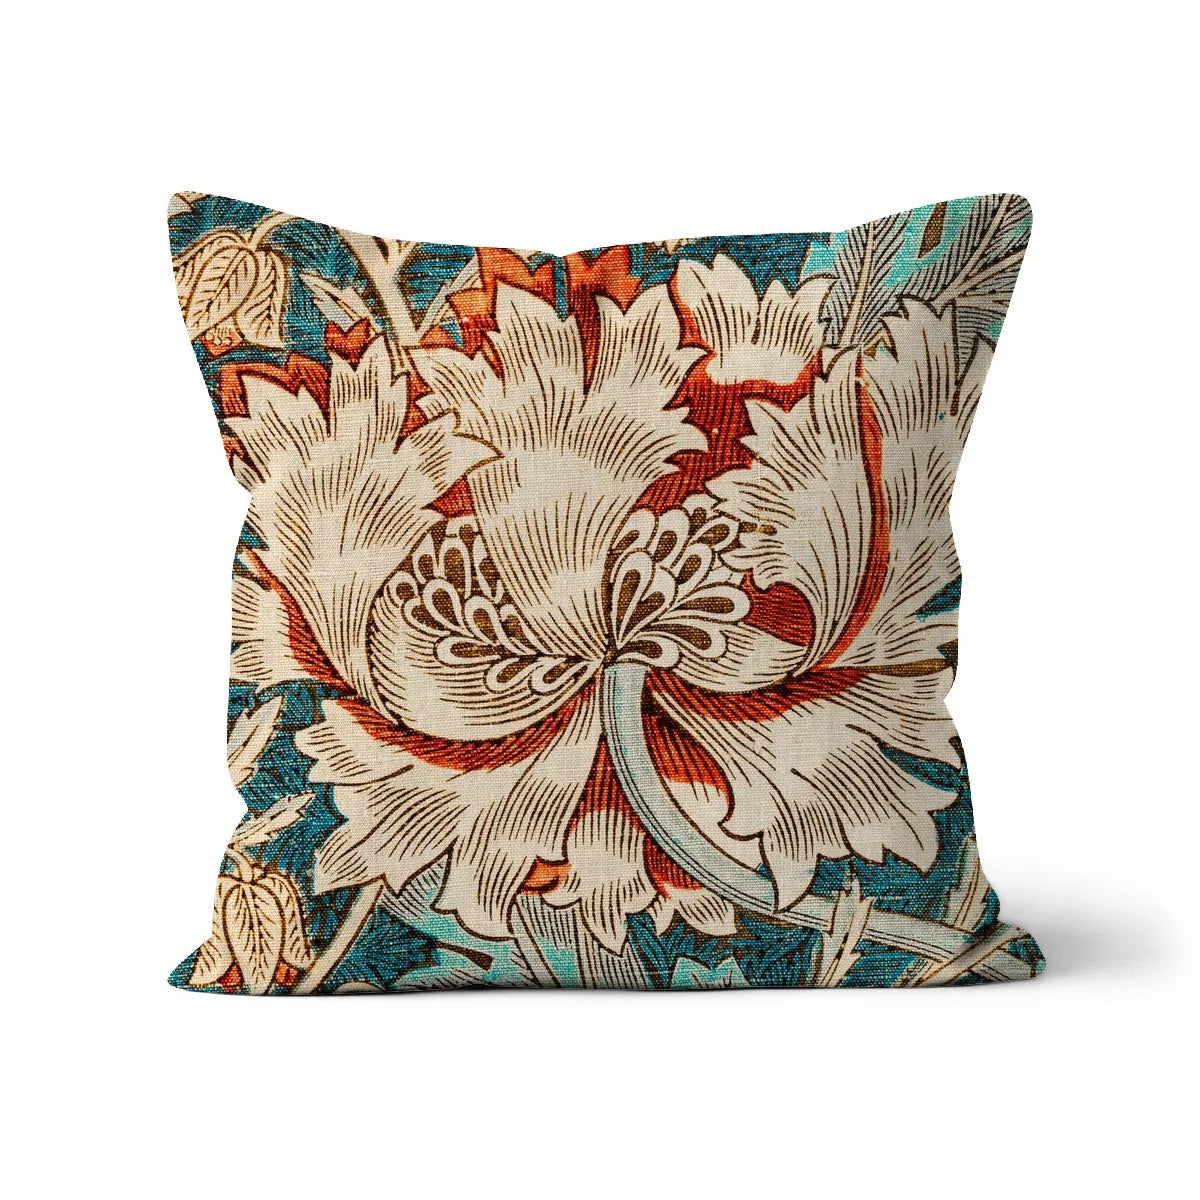 Honeysuckle Too - William Morris Cushion - Decorative Throw Pillow - Canvas /